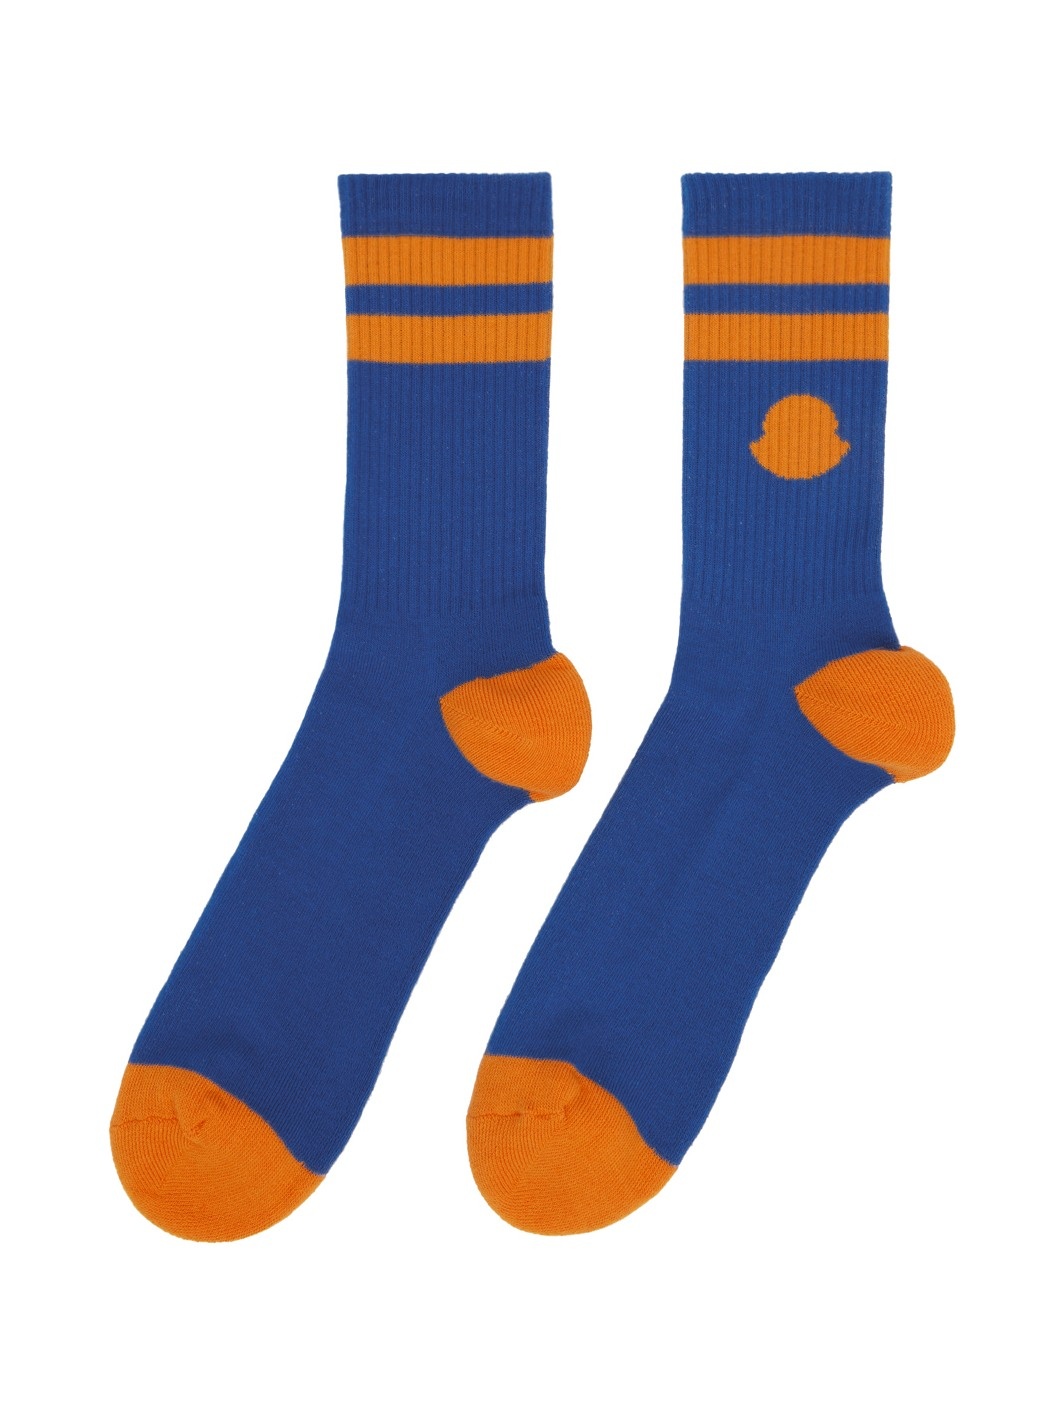 Blue & Orange Striped Socks - 2